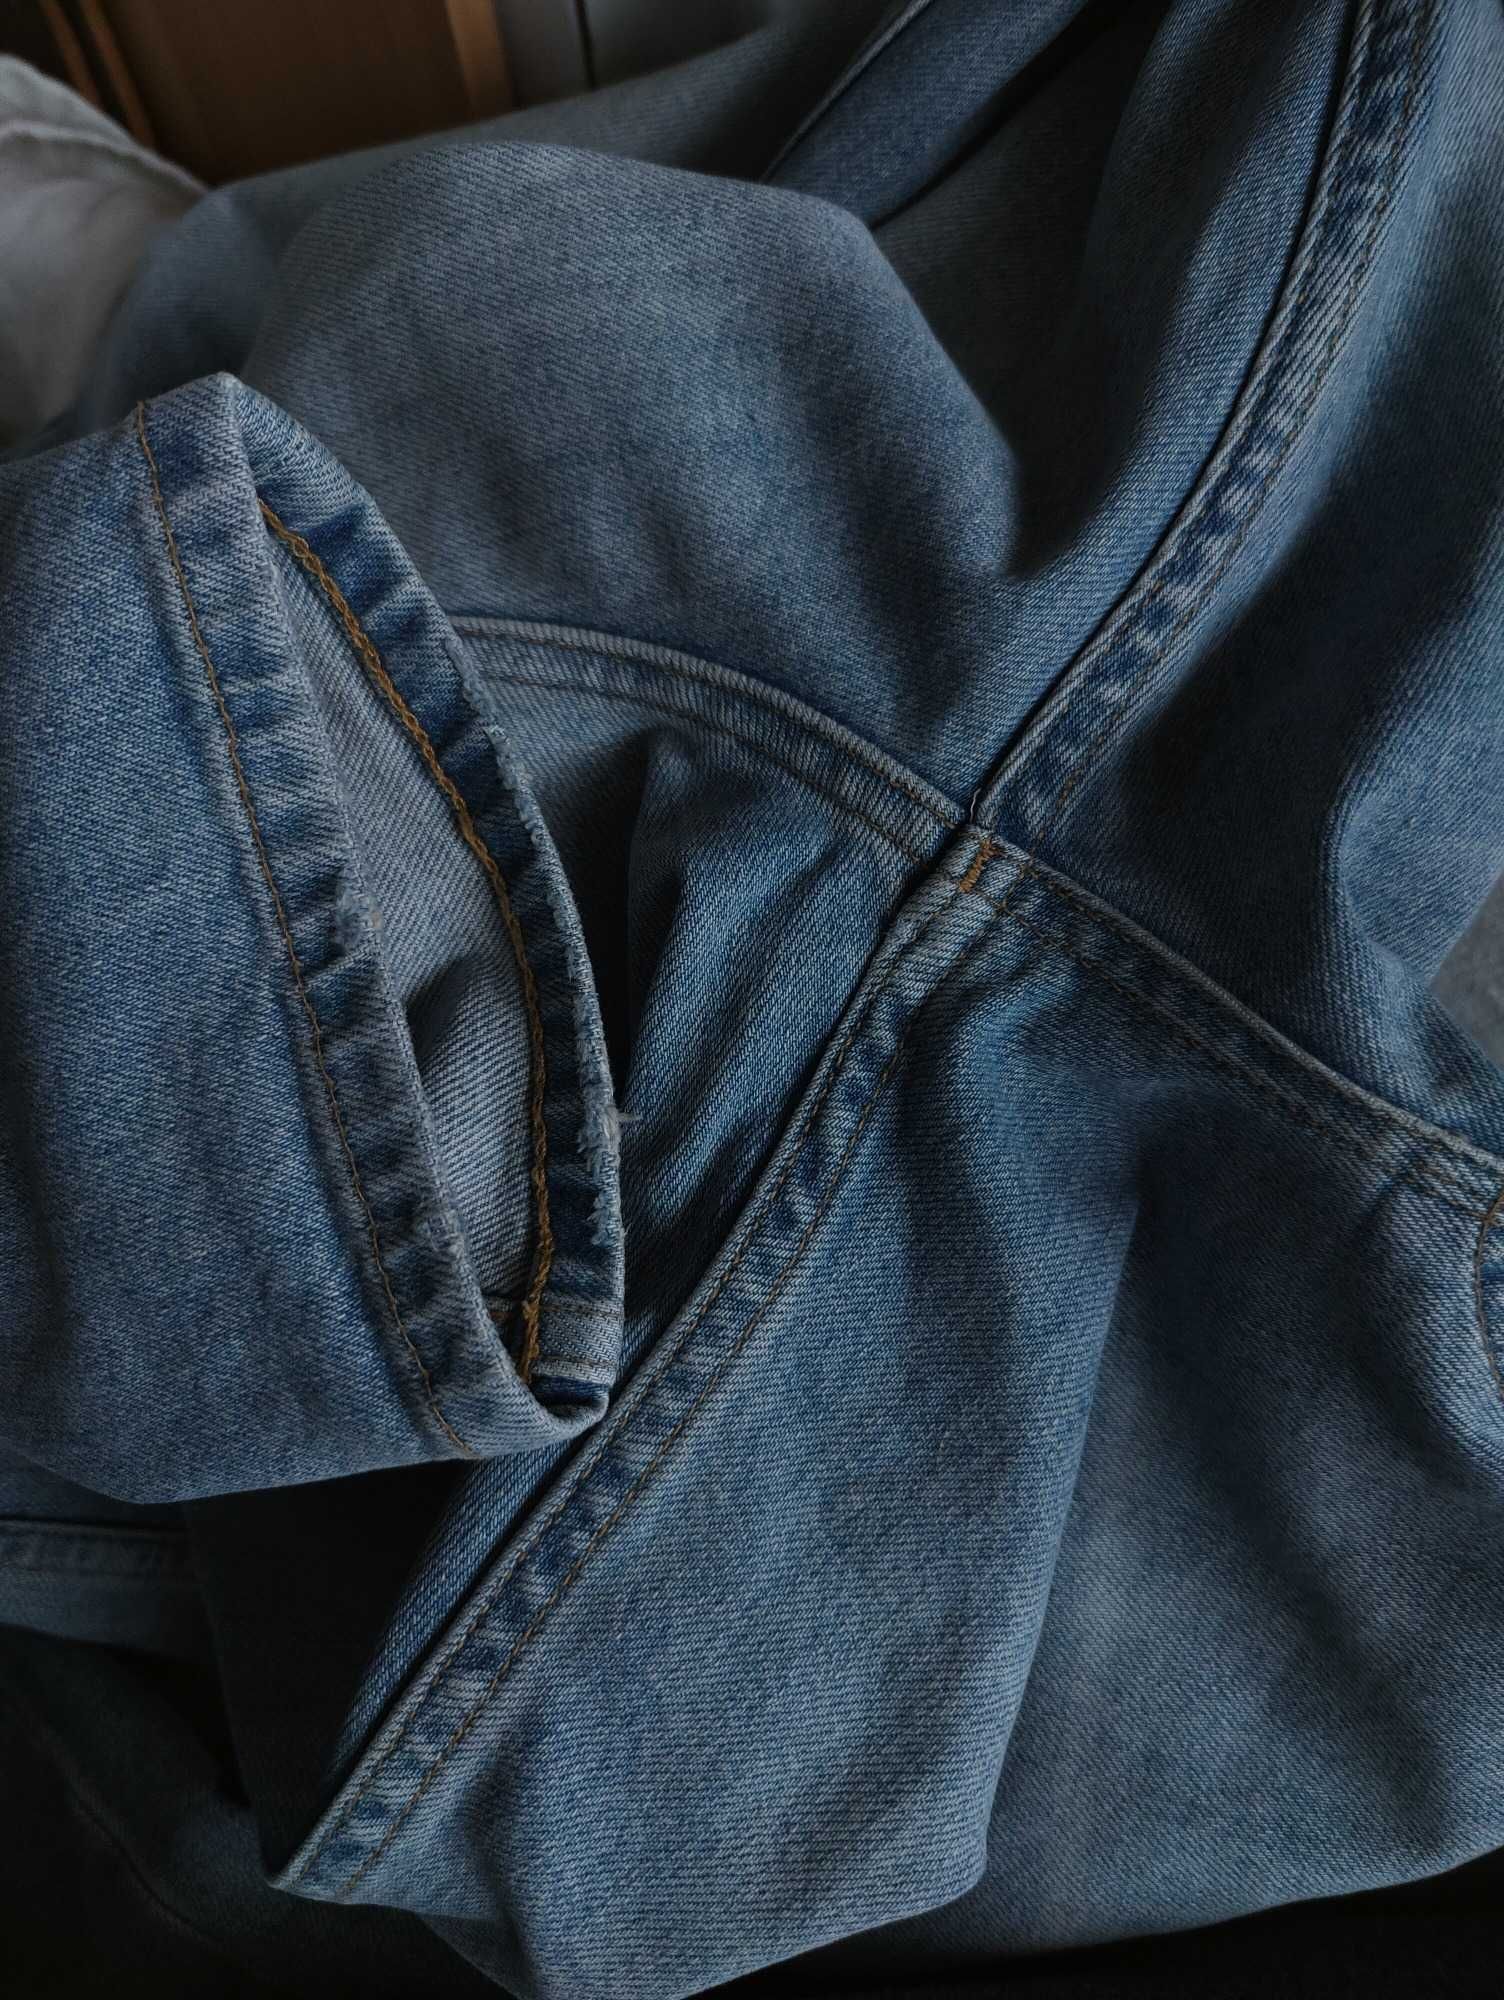 Джинсы Calvin Klein jeans USA w32 stretch mid blue.